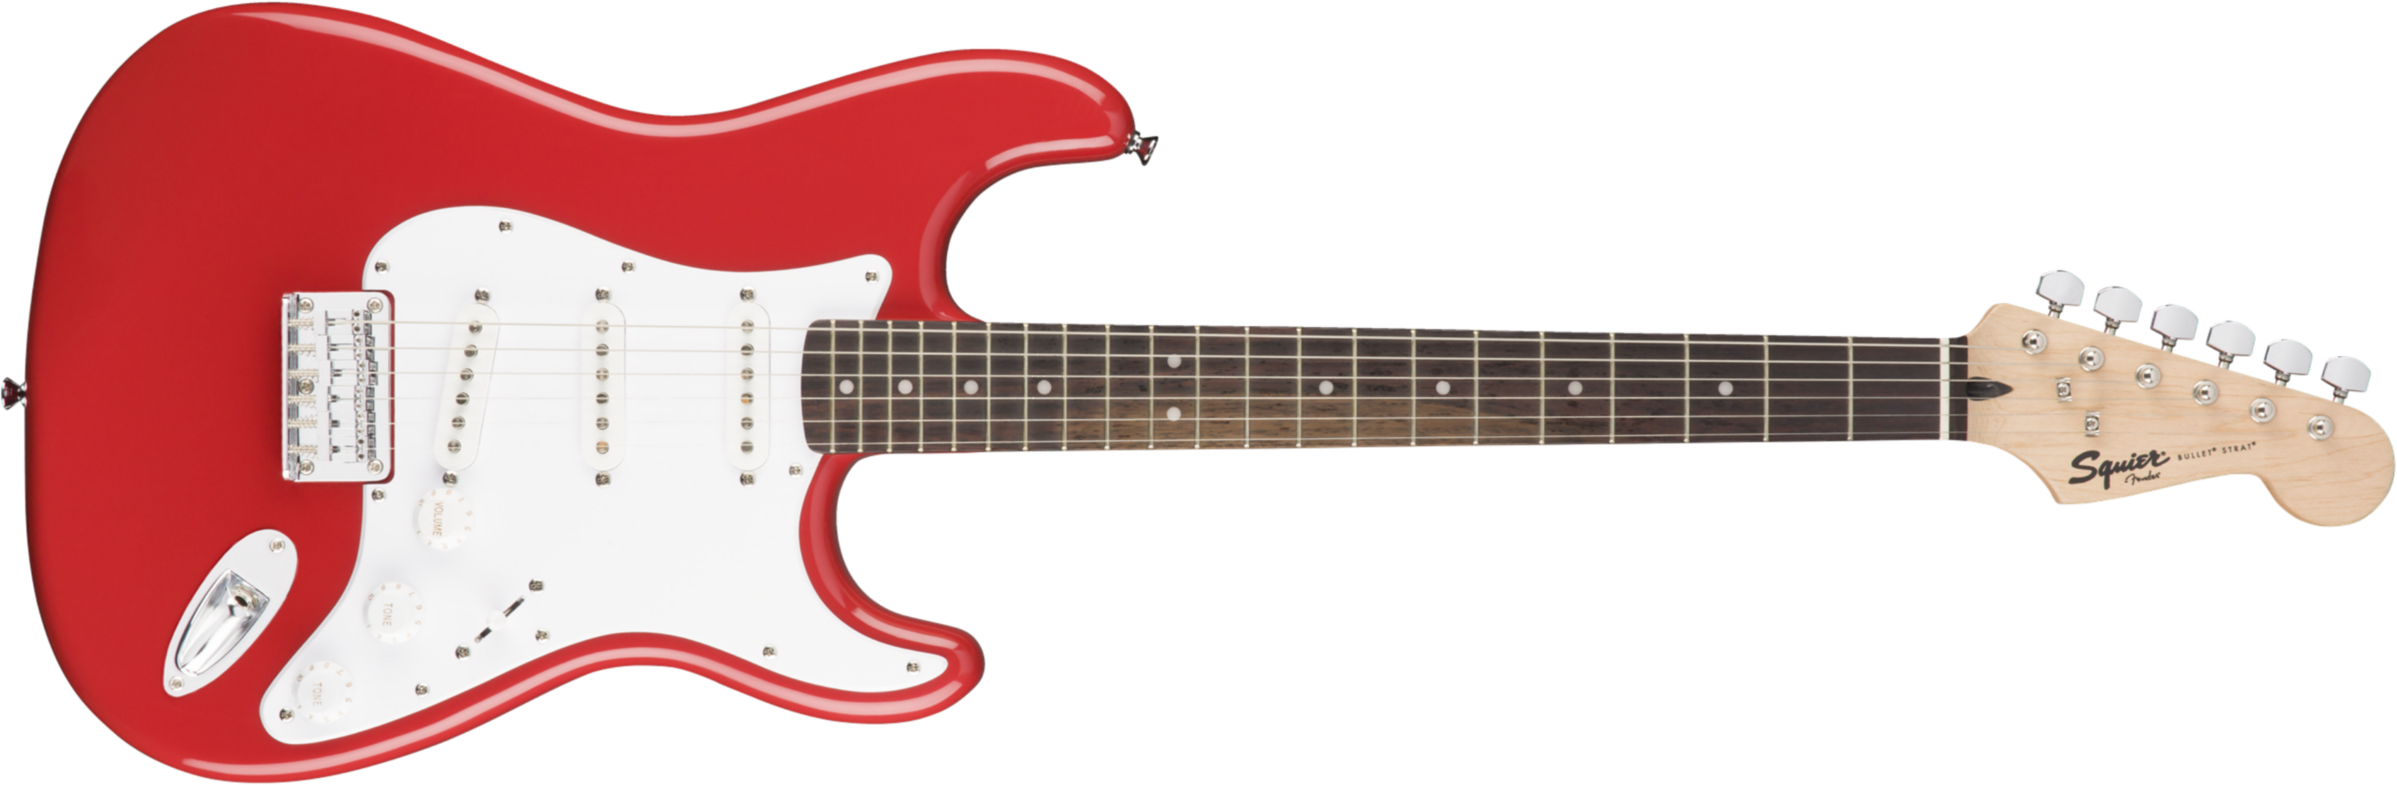 Squier Bullet Stratocaster Ht Sss (lau) - Fiesta Red - Elektrische gitaar in Str-vorm - Main picture